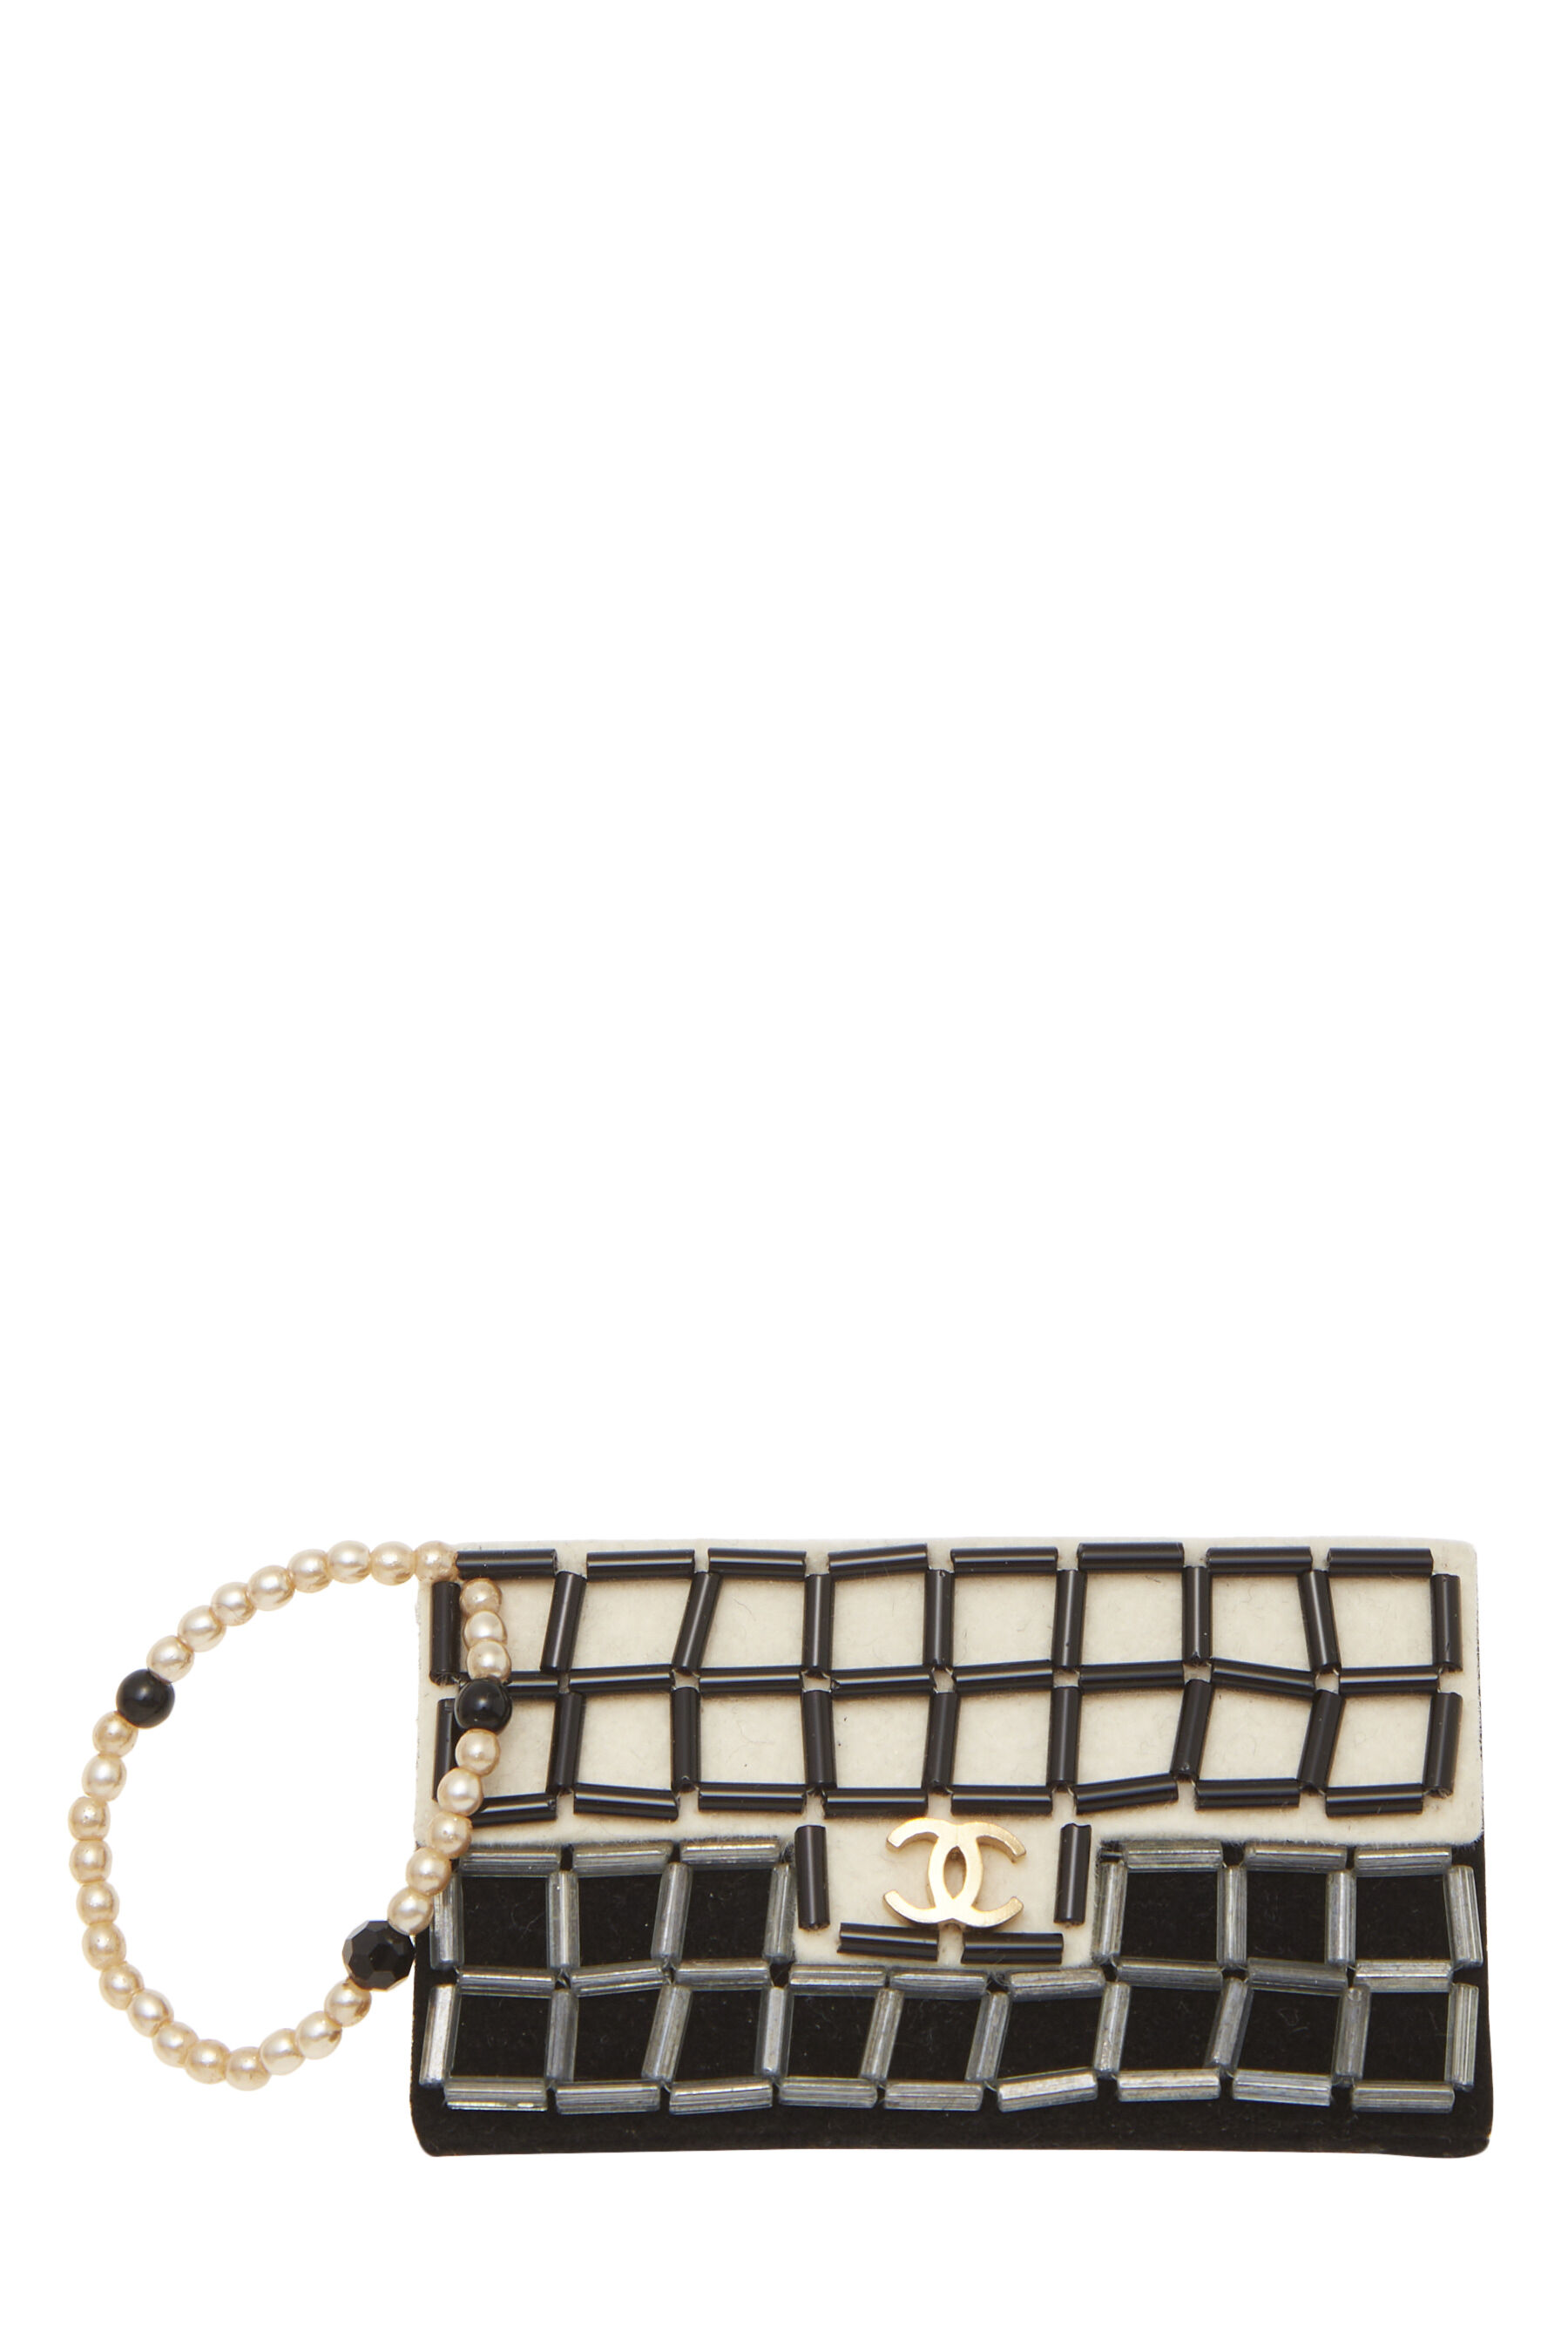 Chanel - Black & White Felt Flap Bag Pin Large